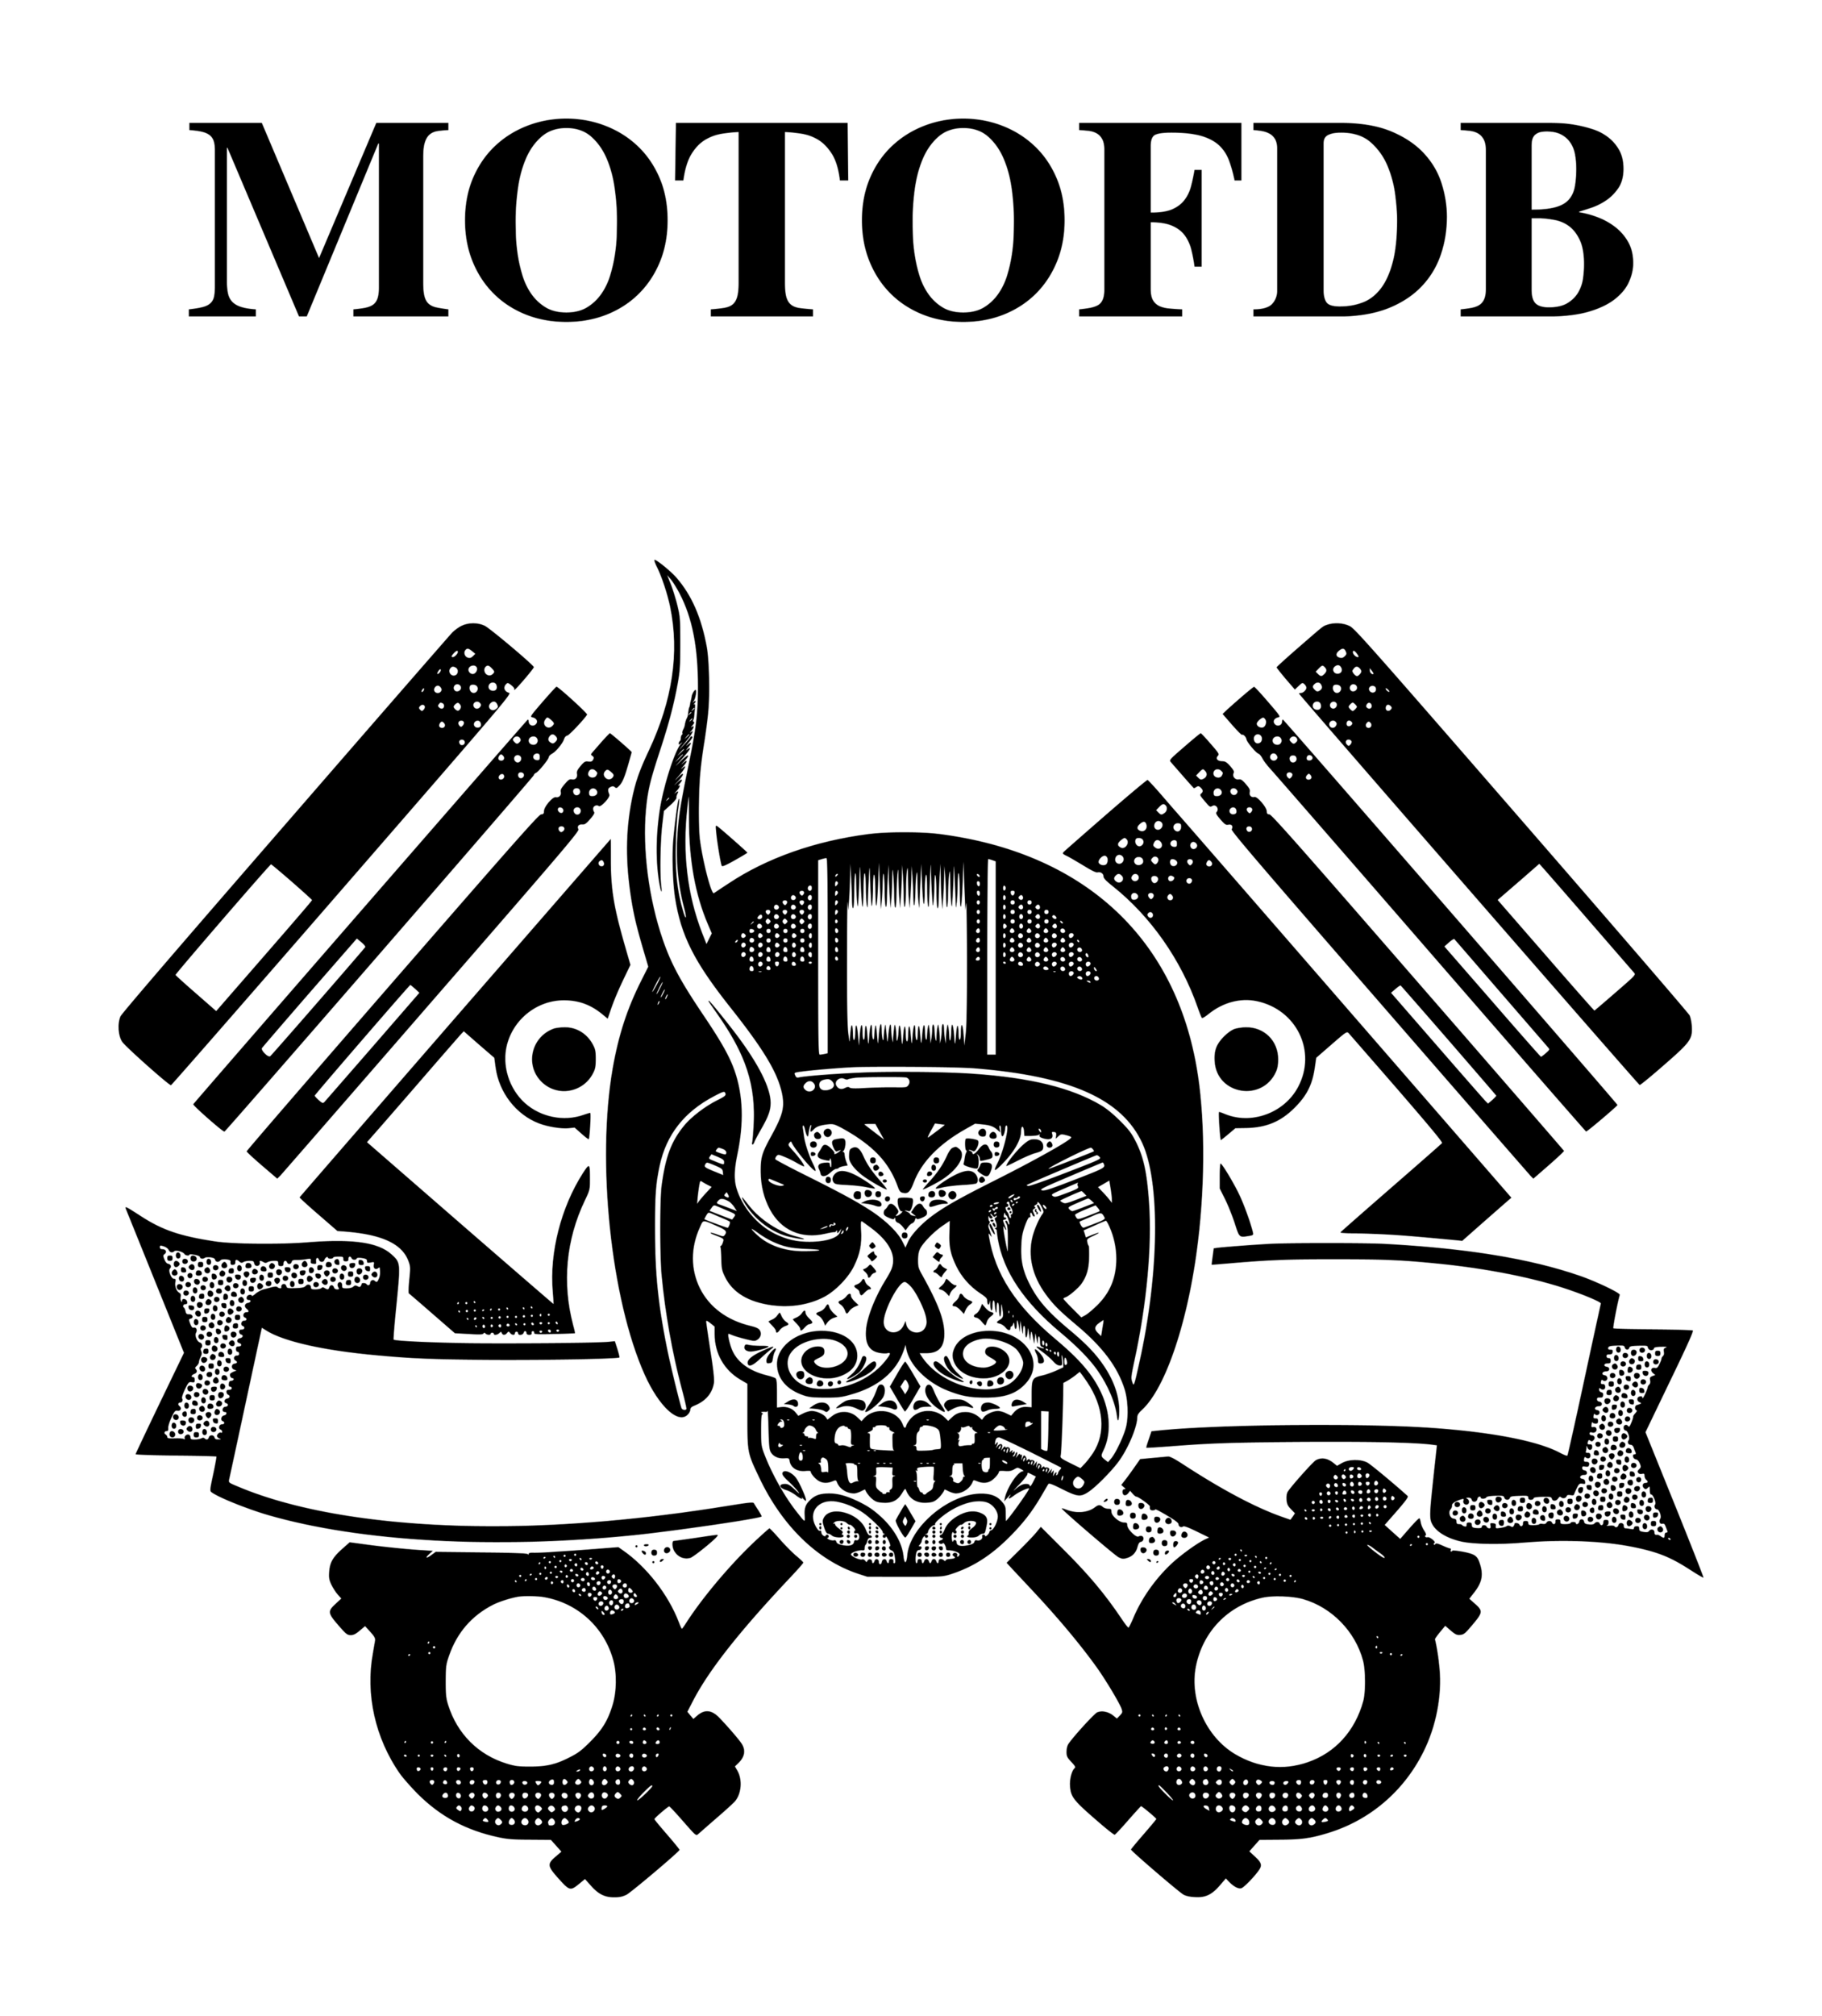 Motofdb.com